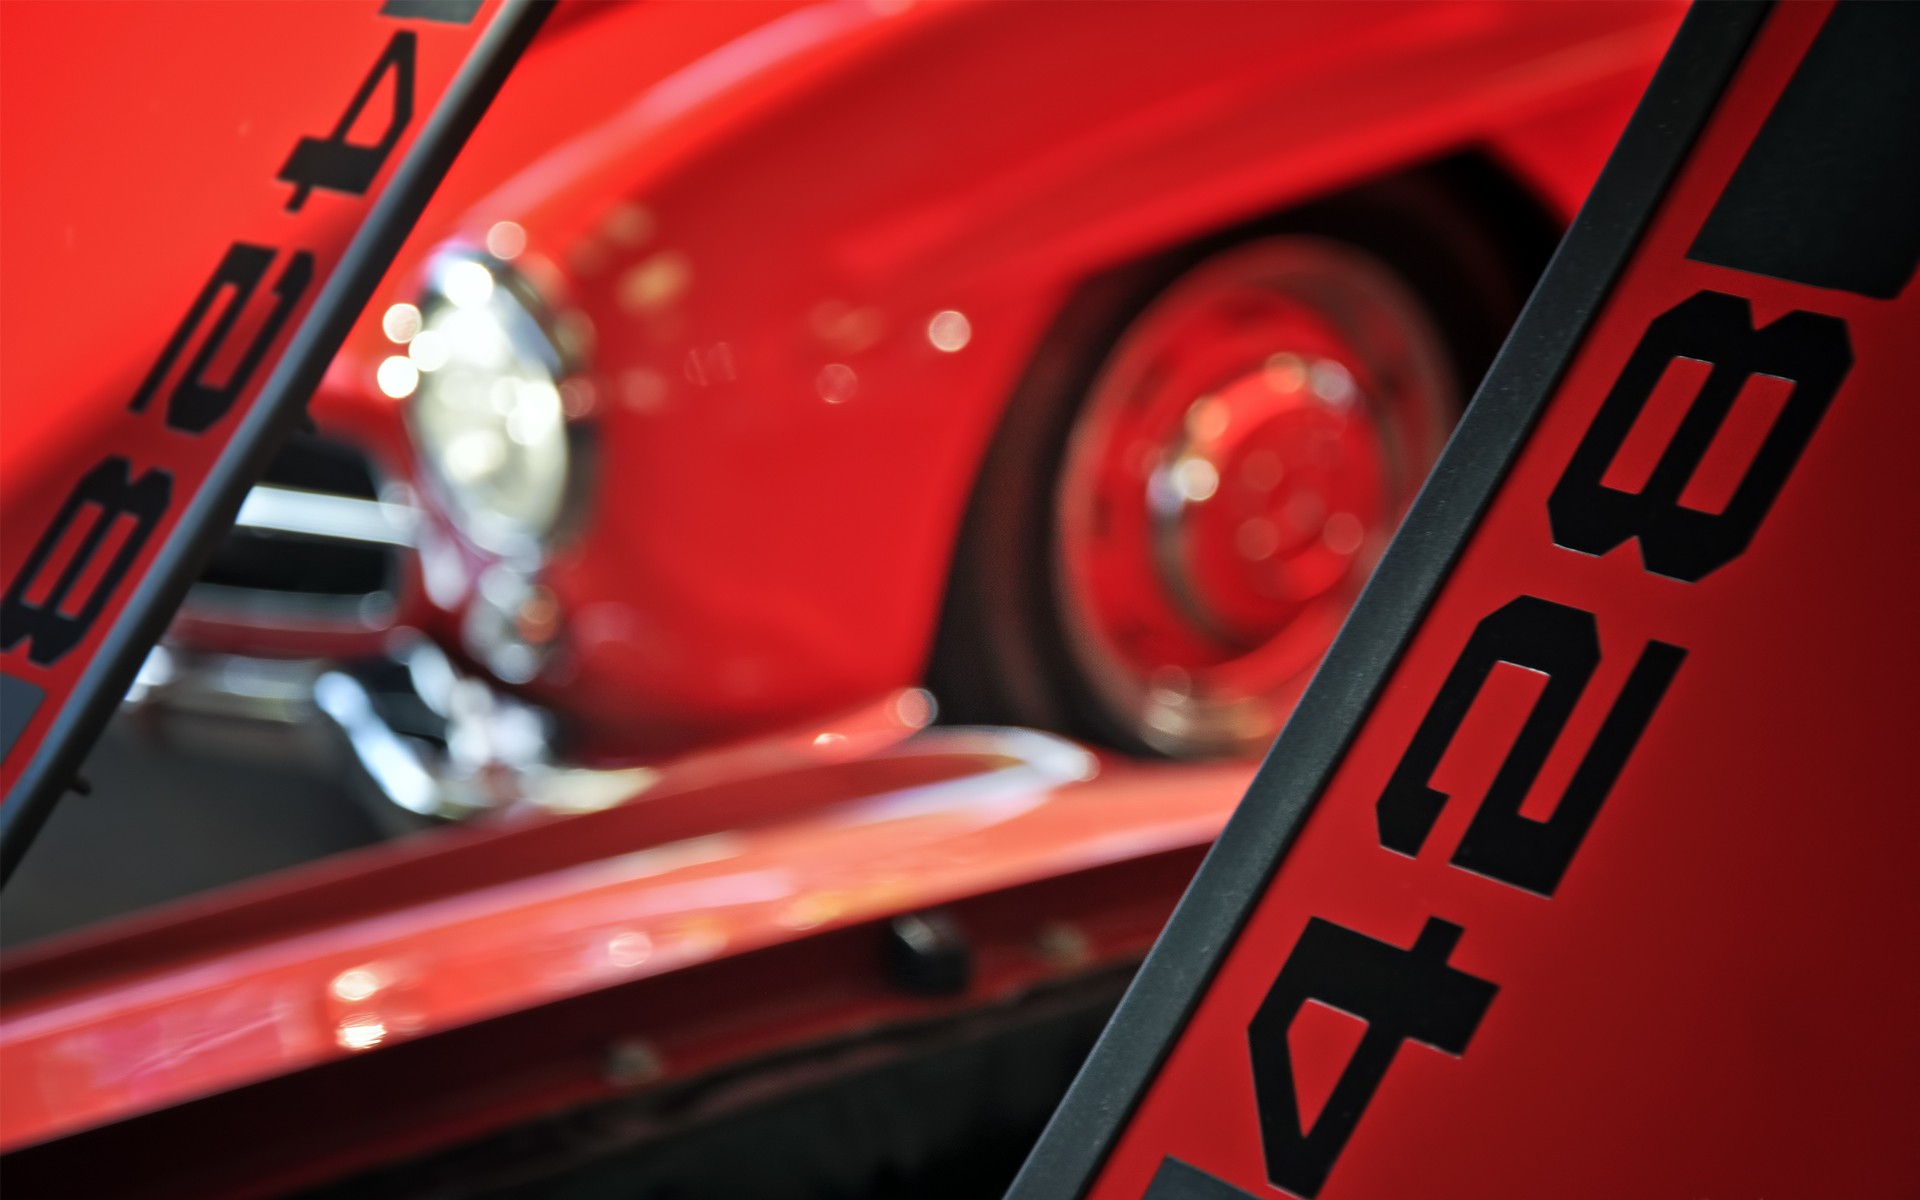 red, cars, Ferrari - desktop wallpaper